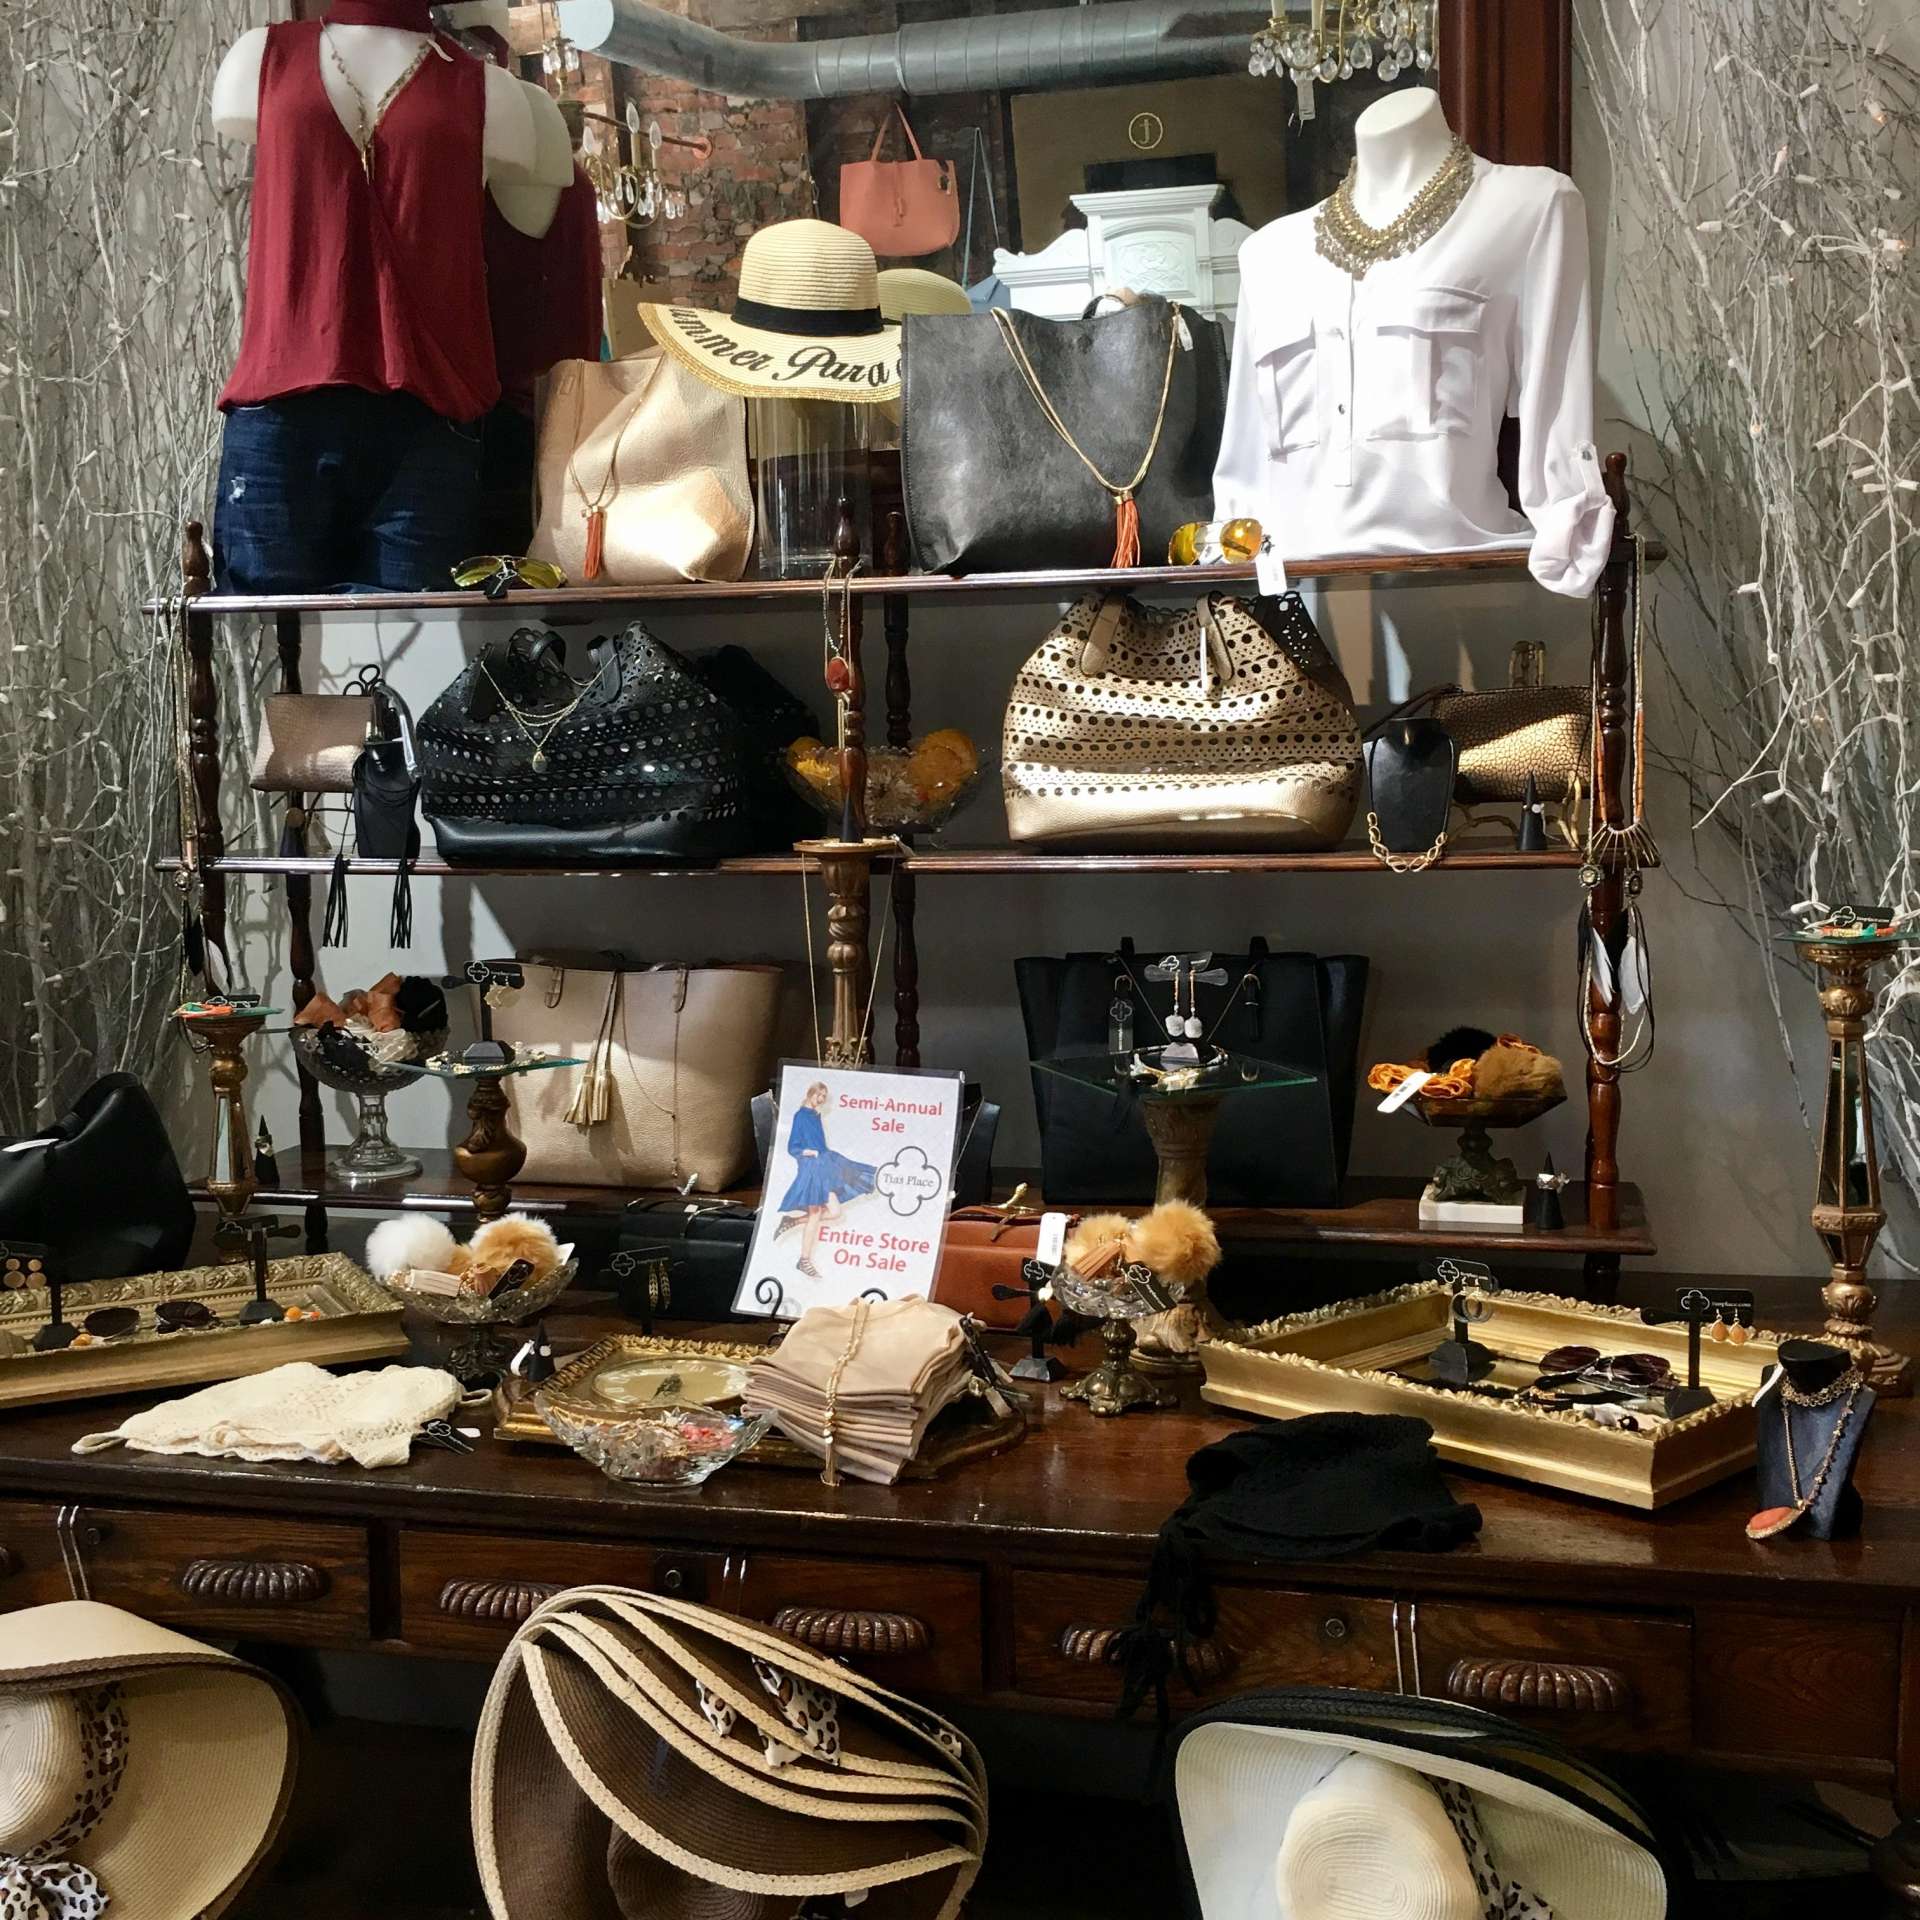 tias-jersey-city-boutique-inside-shelf-hats-purses-shopping-local